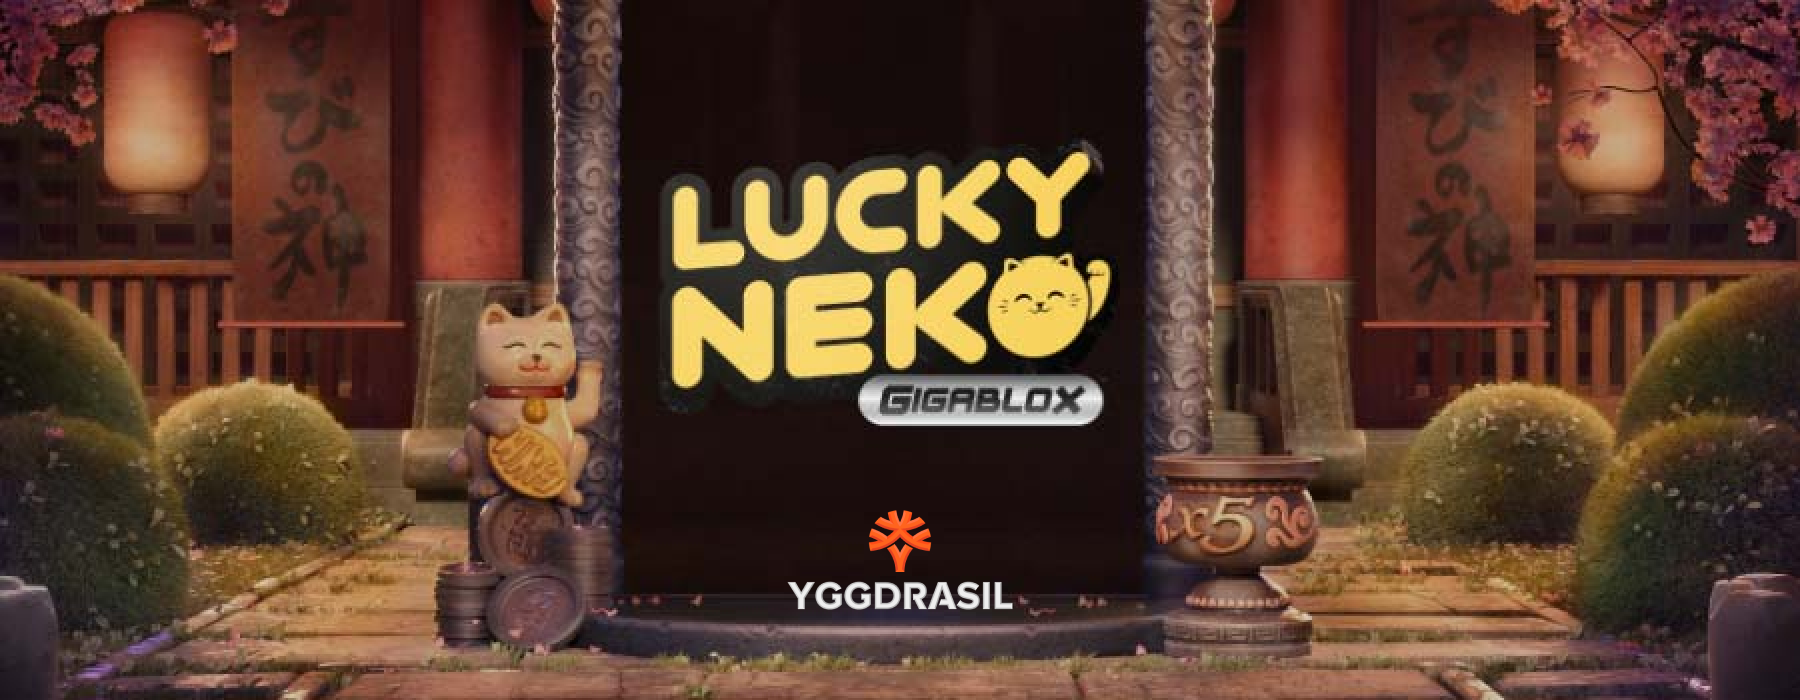 Lucky Neko Gigablox dengan Yggdrasil